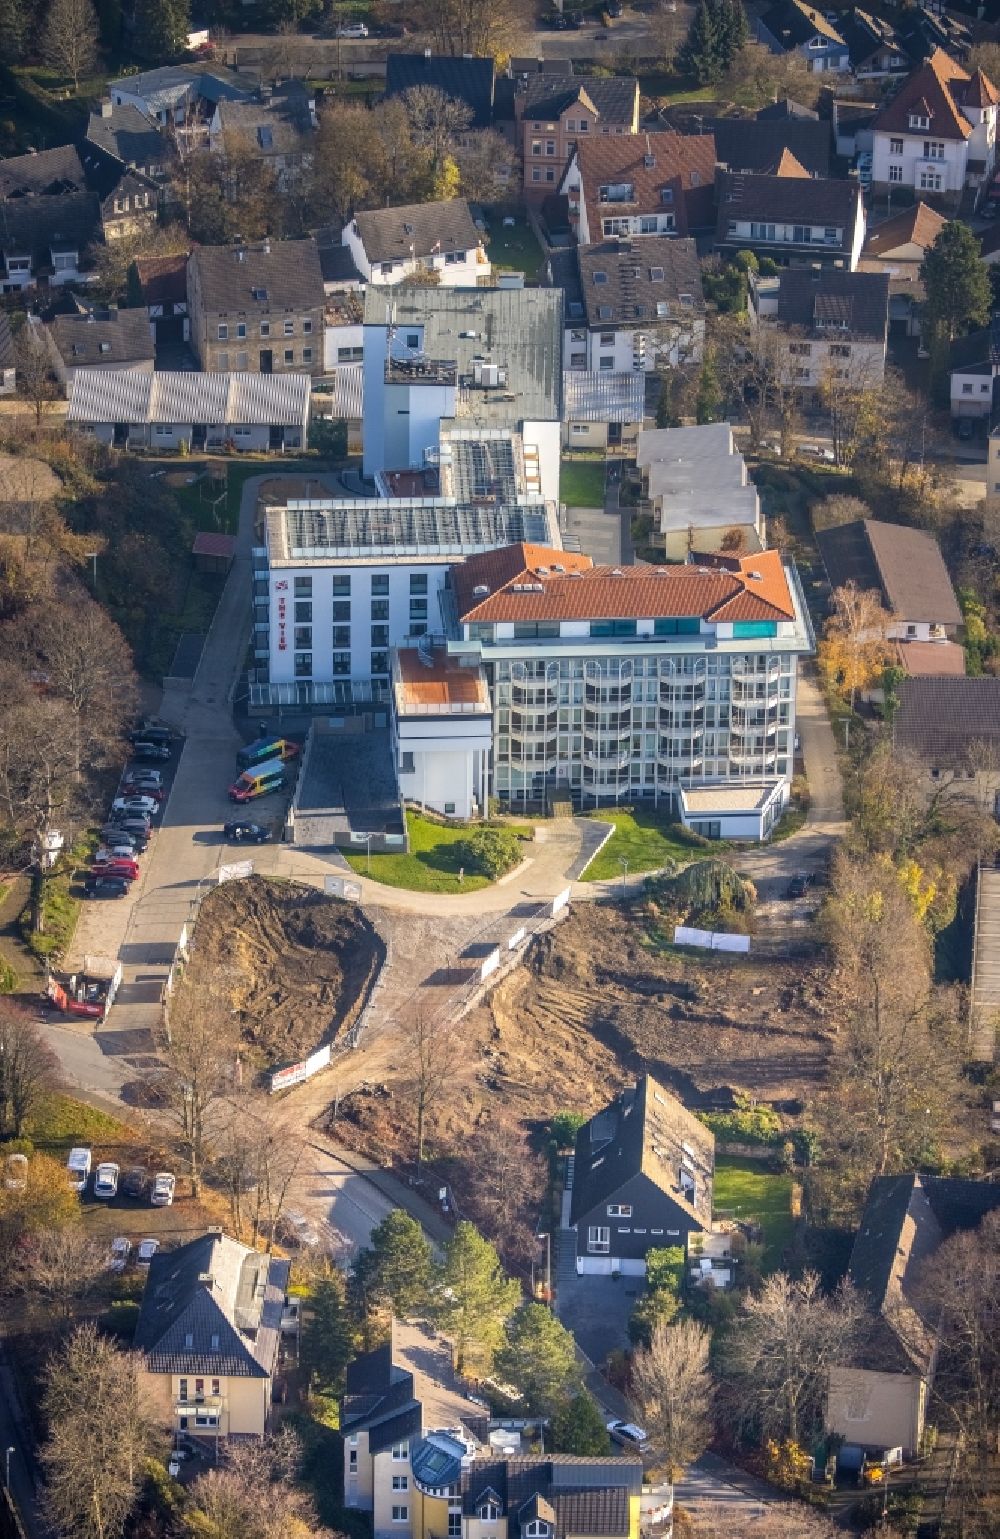 Aerial photograph Herdecke - Building of the former nursing home - senior residence on the Goethestrasse in Herdecke in the state of North Rhine-Westphalia, Germany